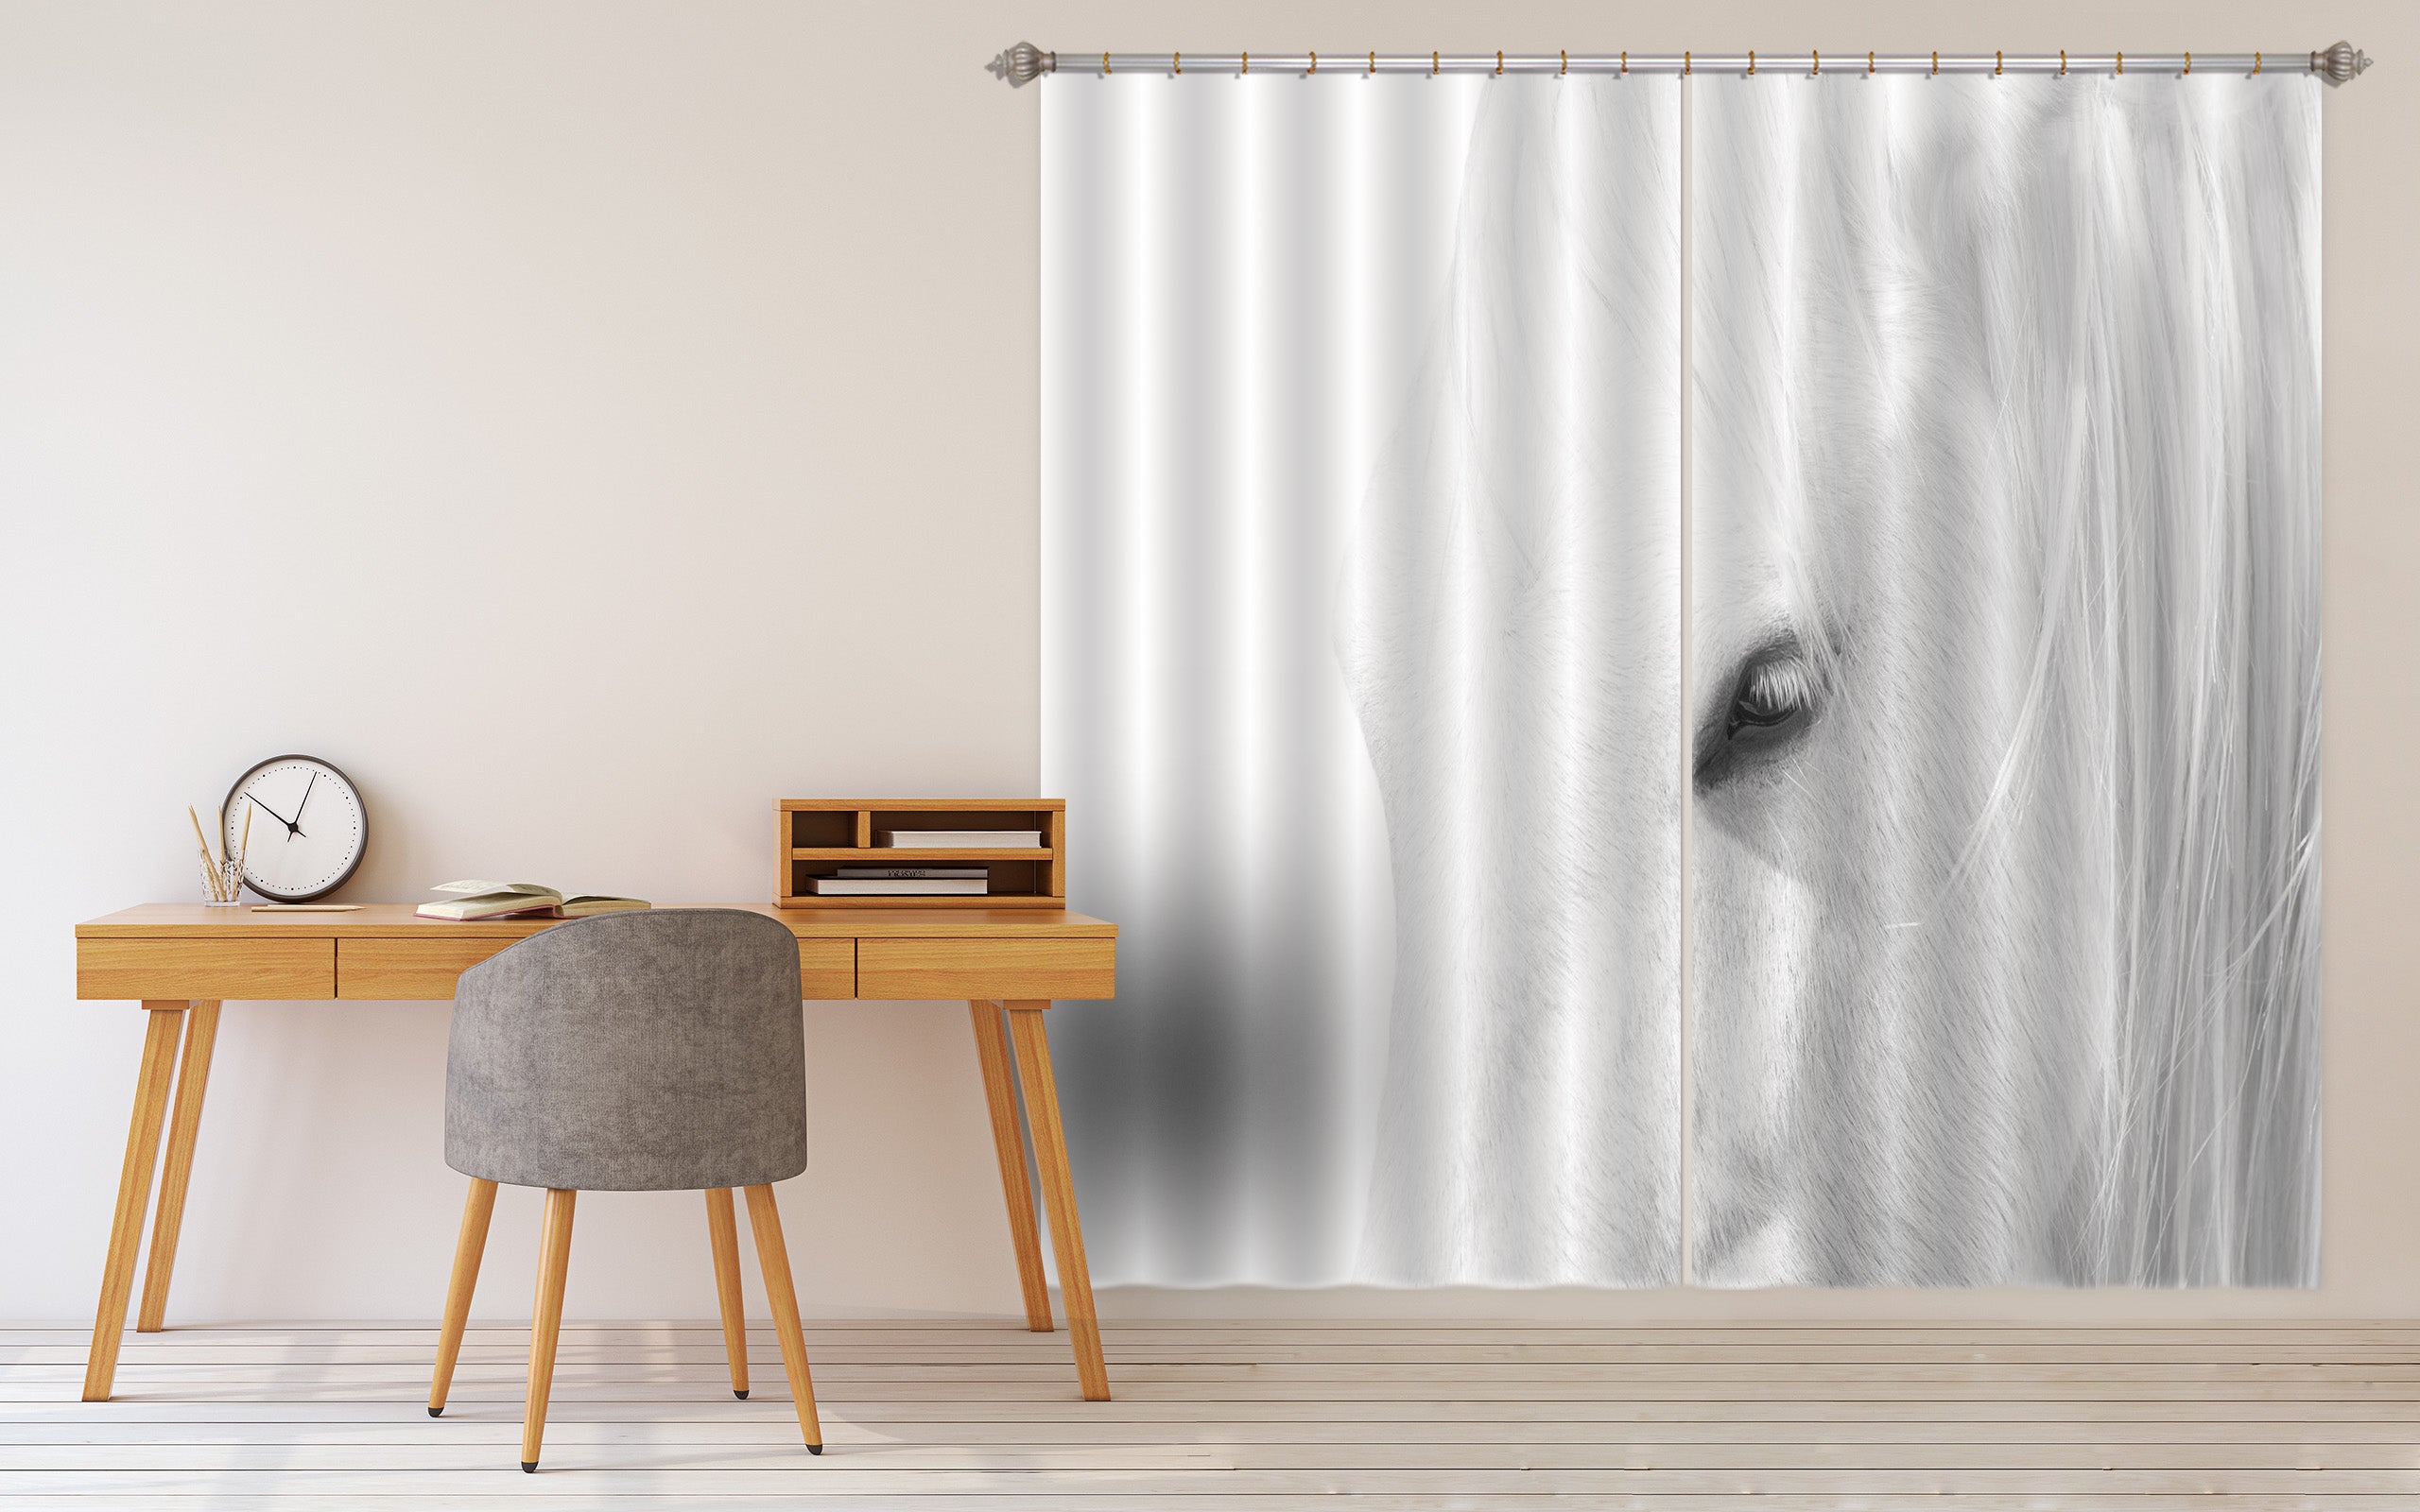 3D White Horse 185 Marco Carmassi Curtain Curtains Drapes